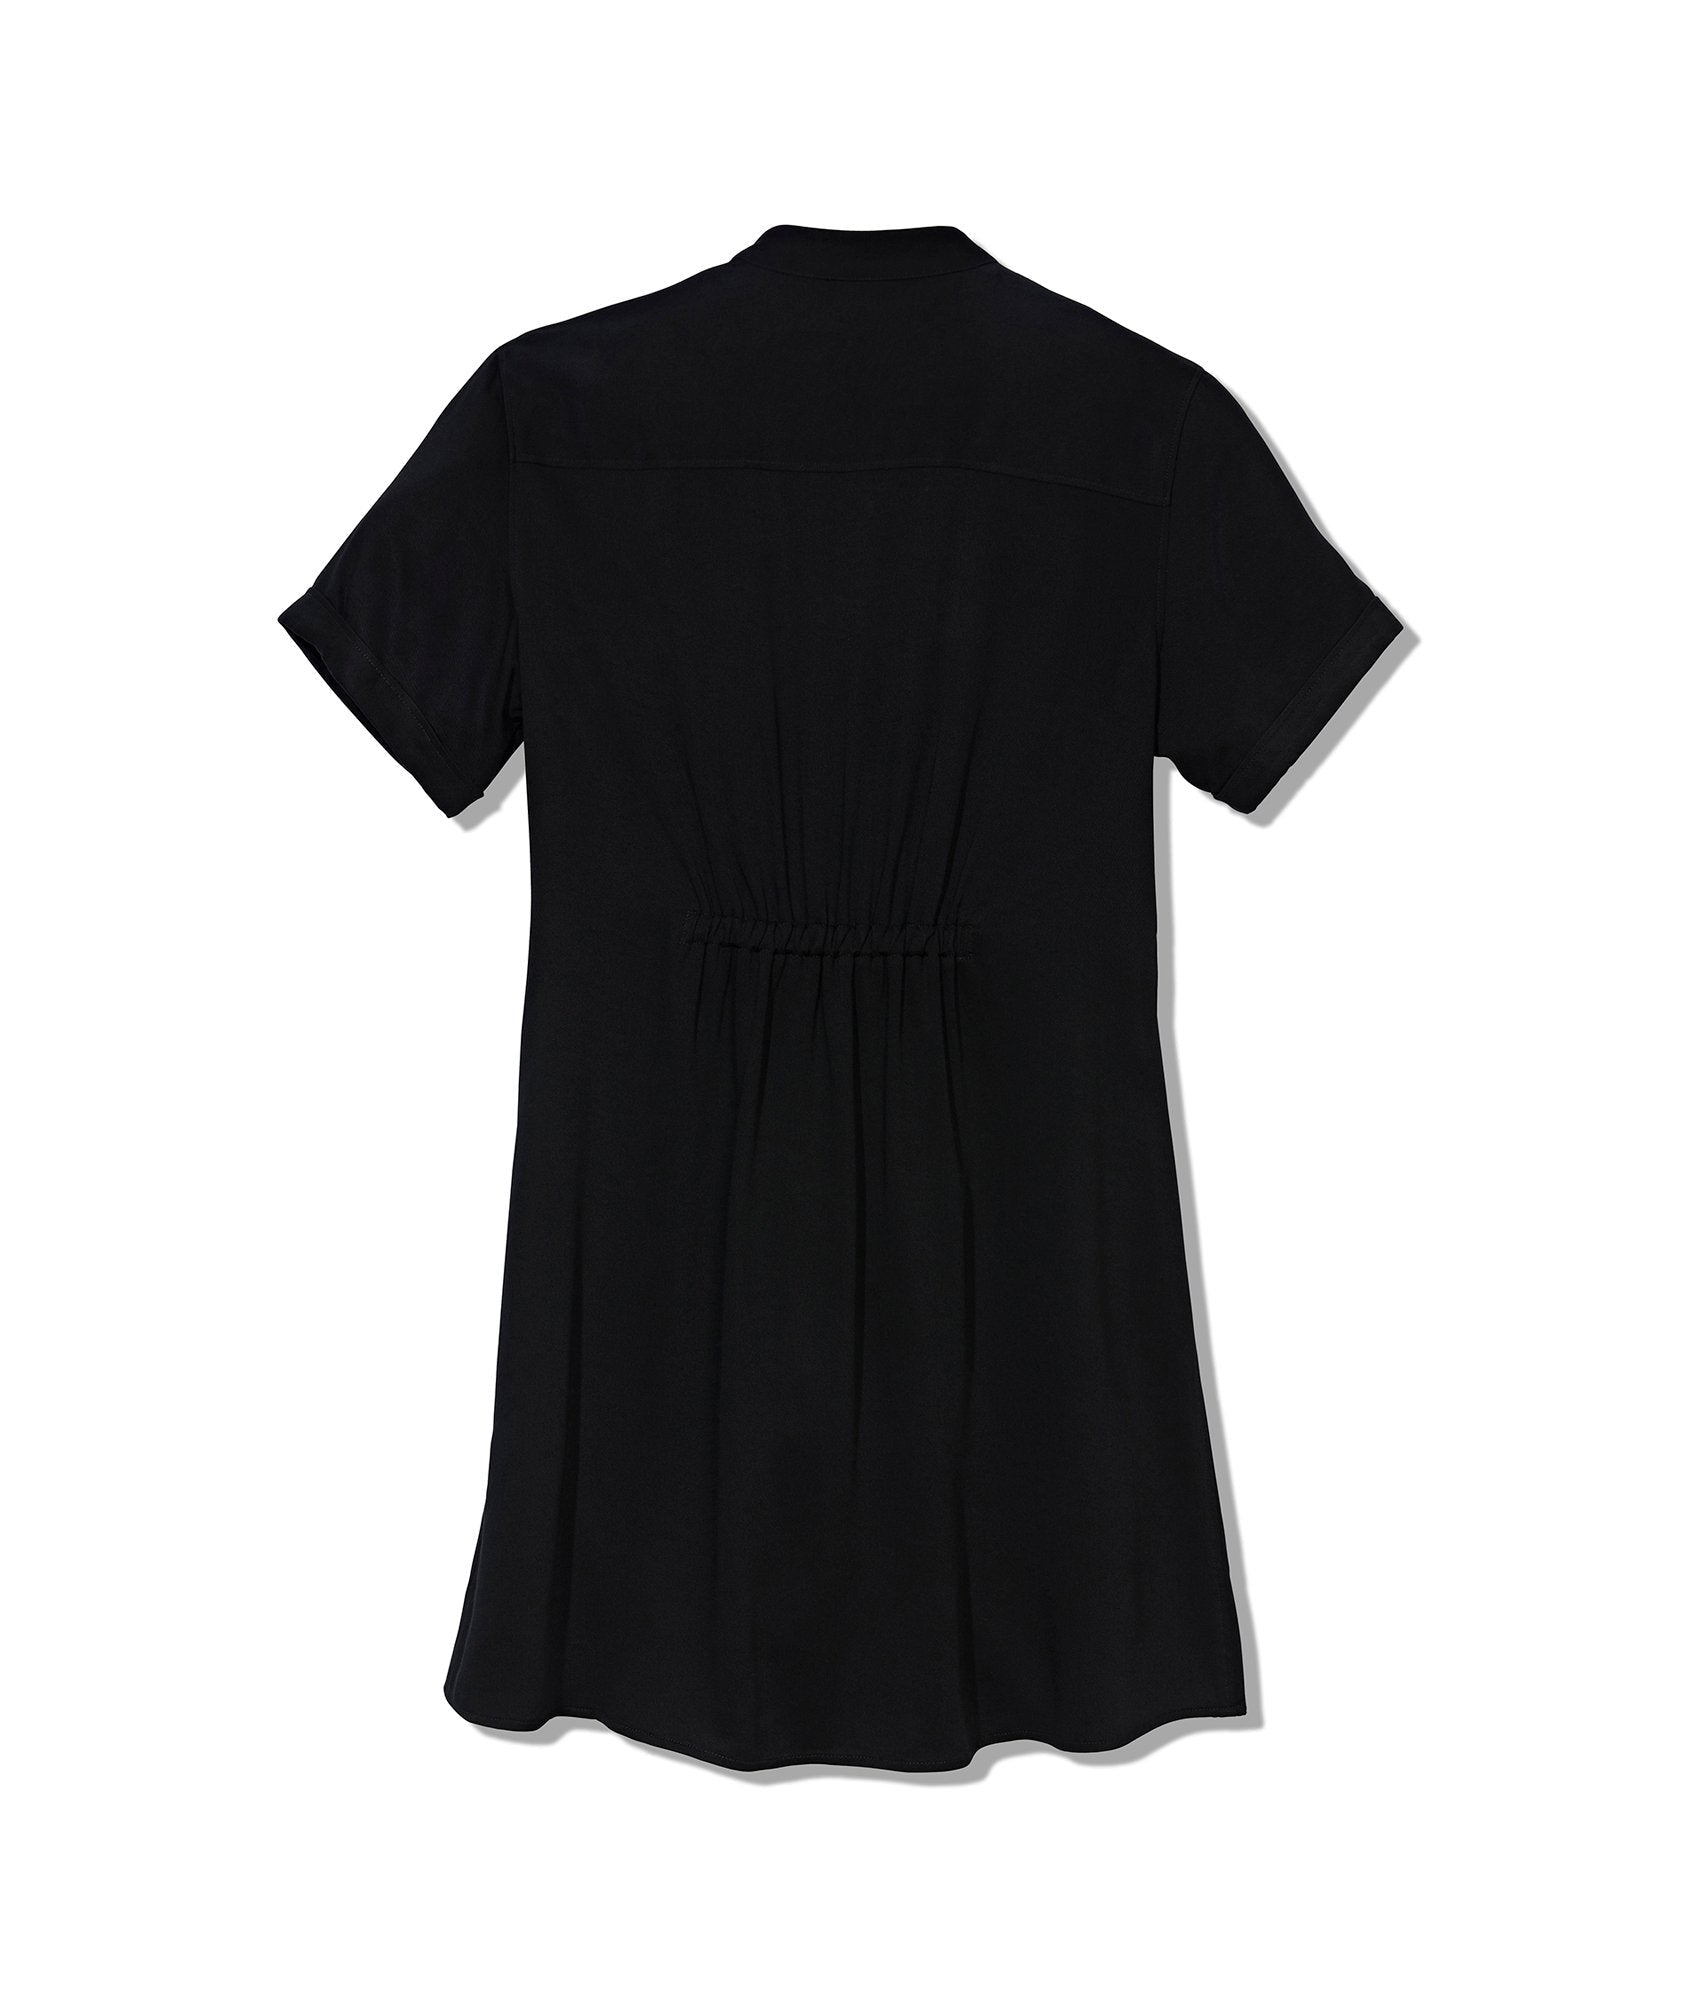 The Frieda Essential Day Dress in Black